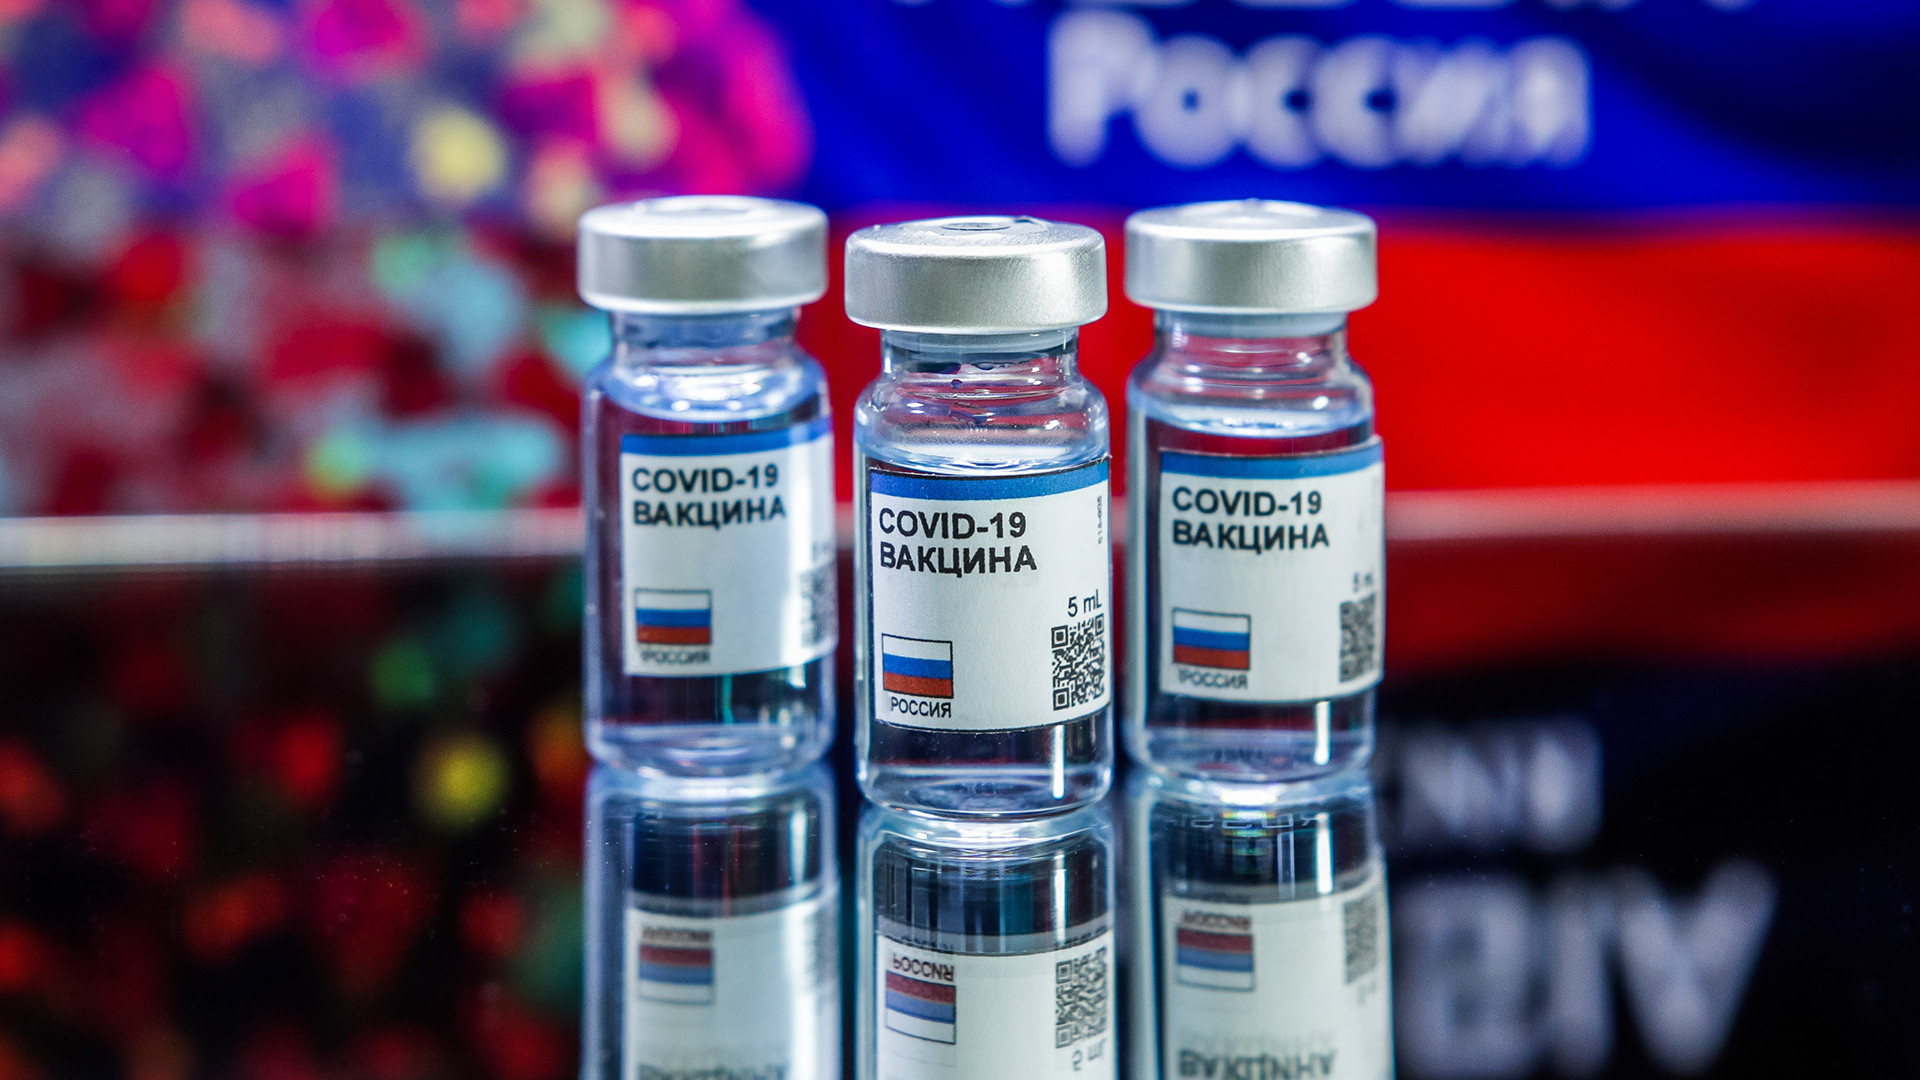 Vaccine against COVID-19, made in Russia